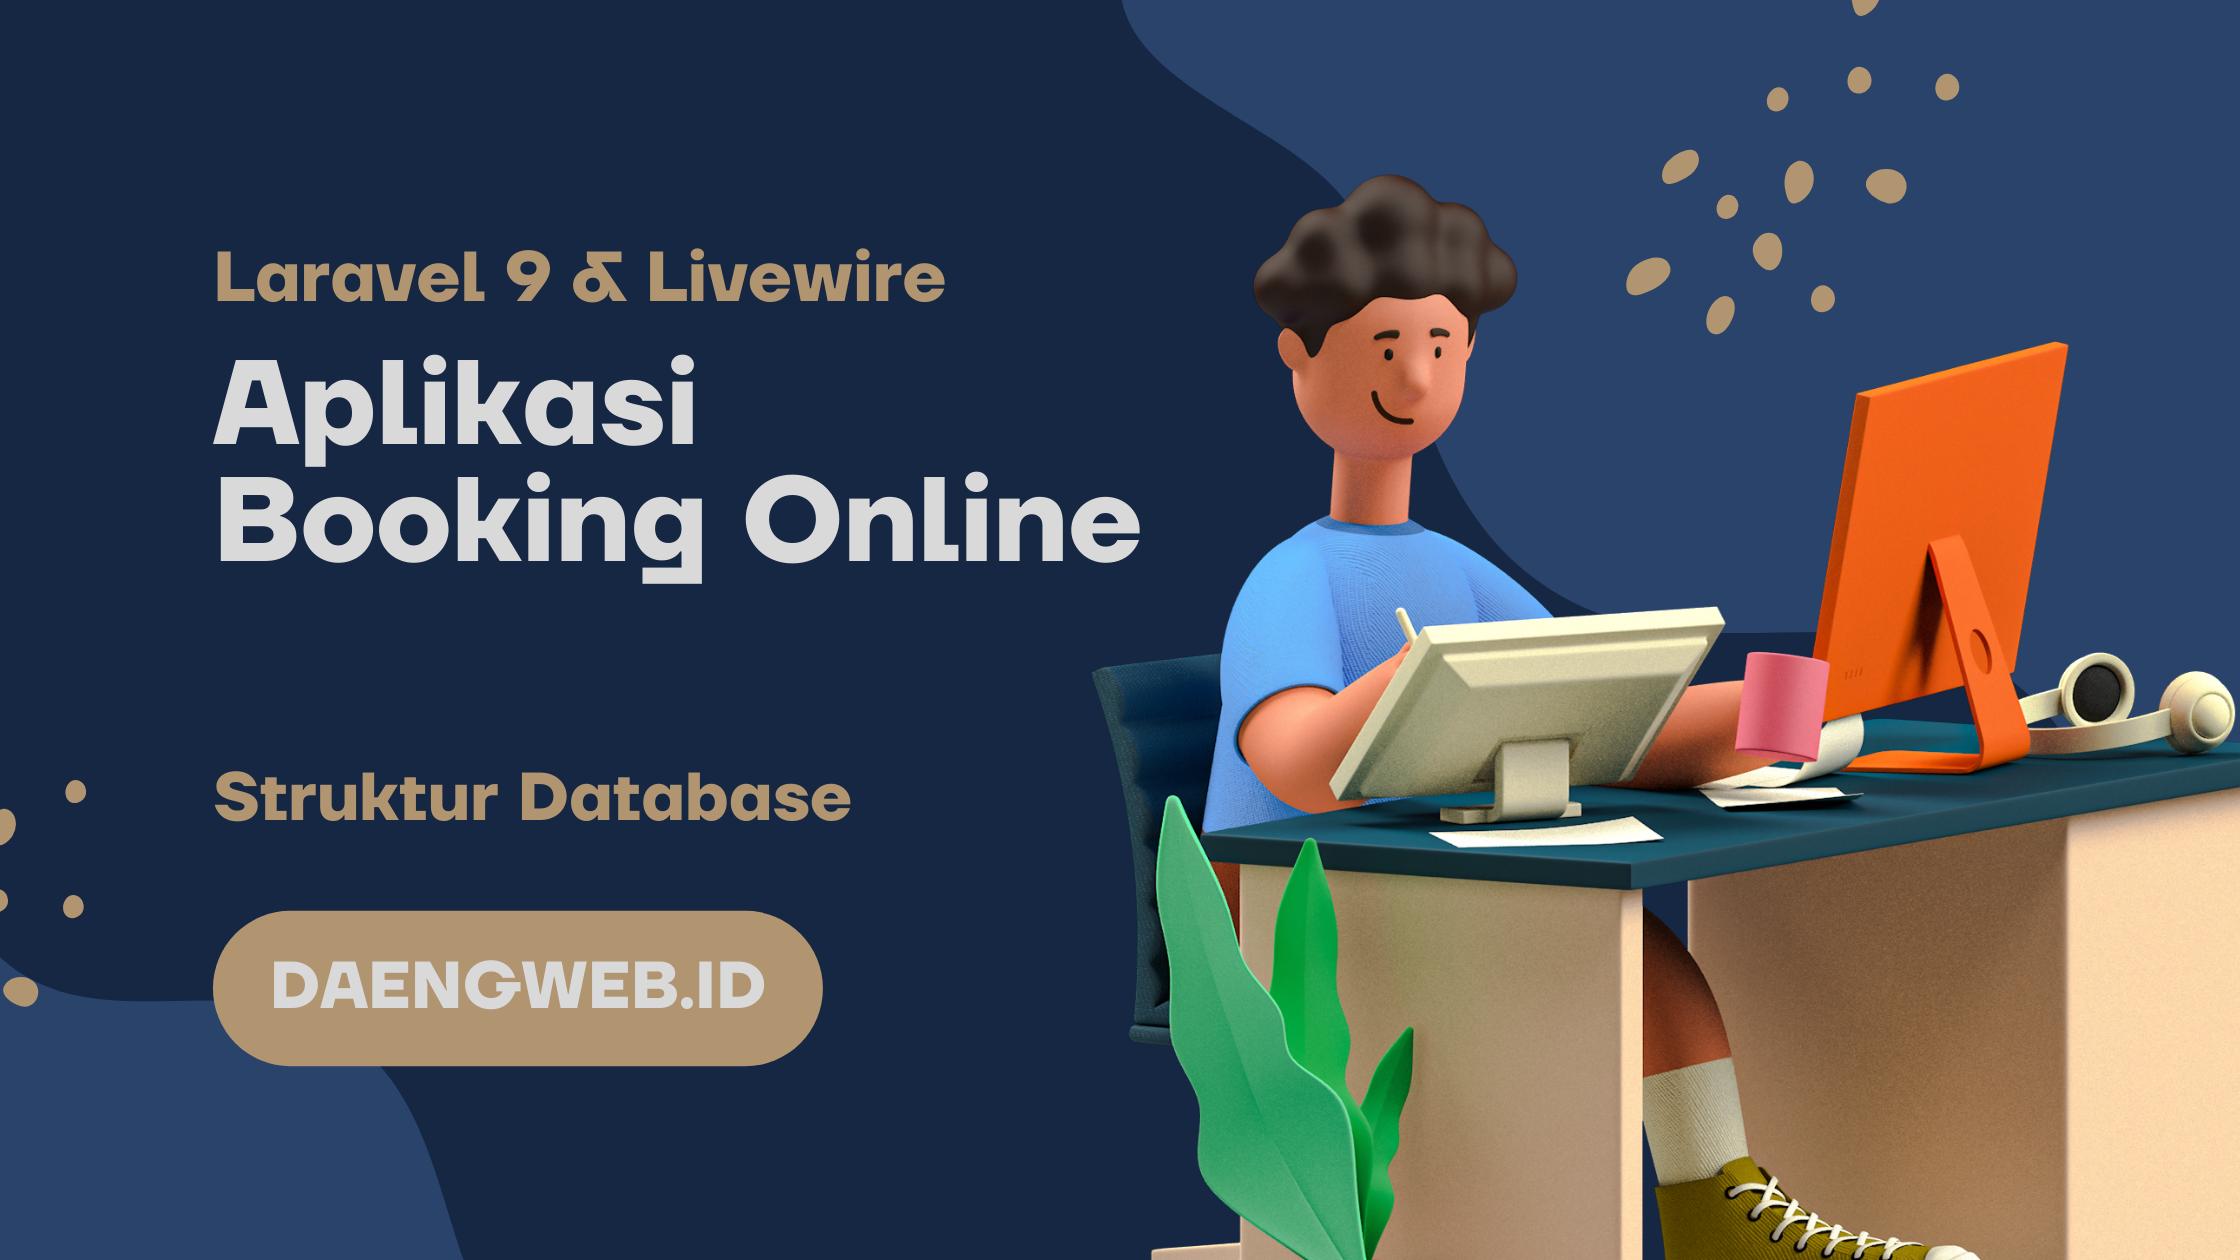 Aplikasi Booking Online Laravel 9 & Livewire #1: Struktur Database